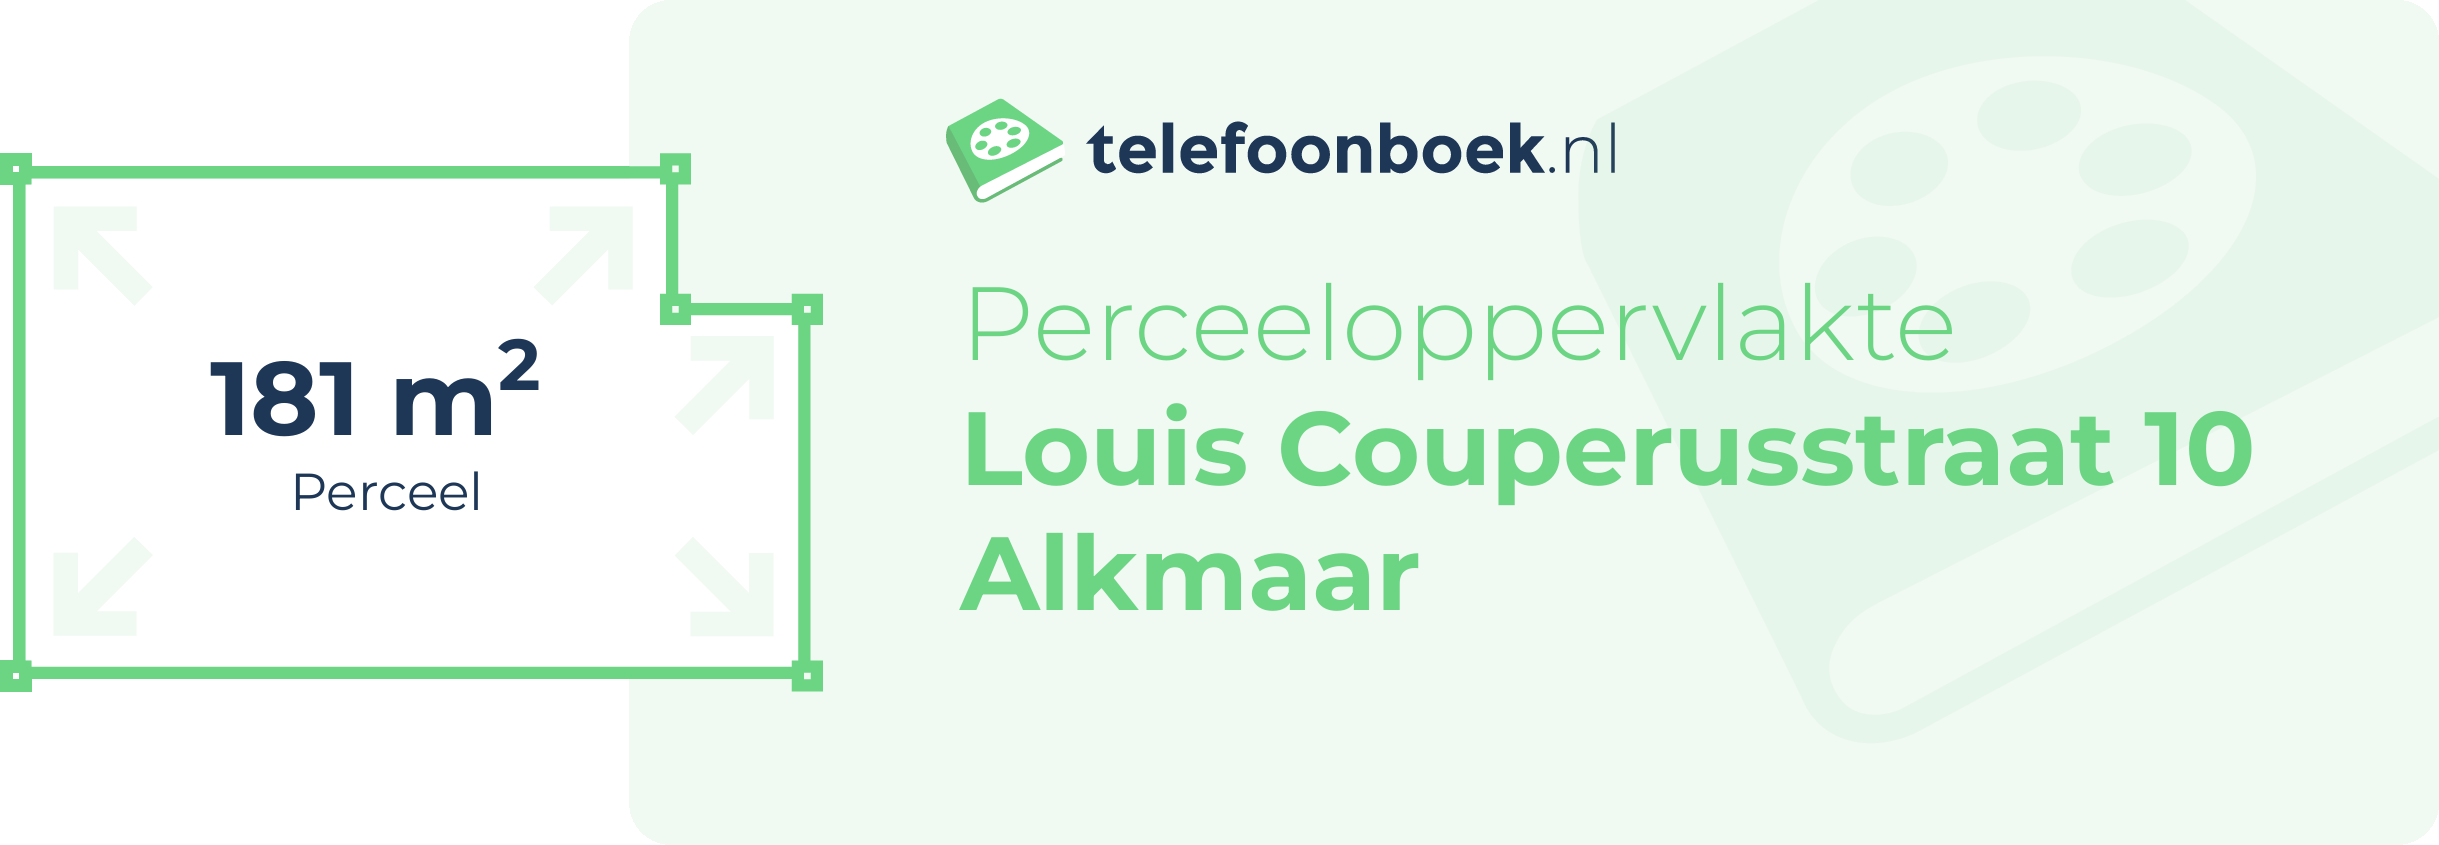 Perceeloppervlakte Louis Couperusstraat 10 Alkmaar